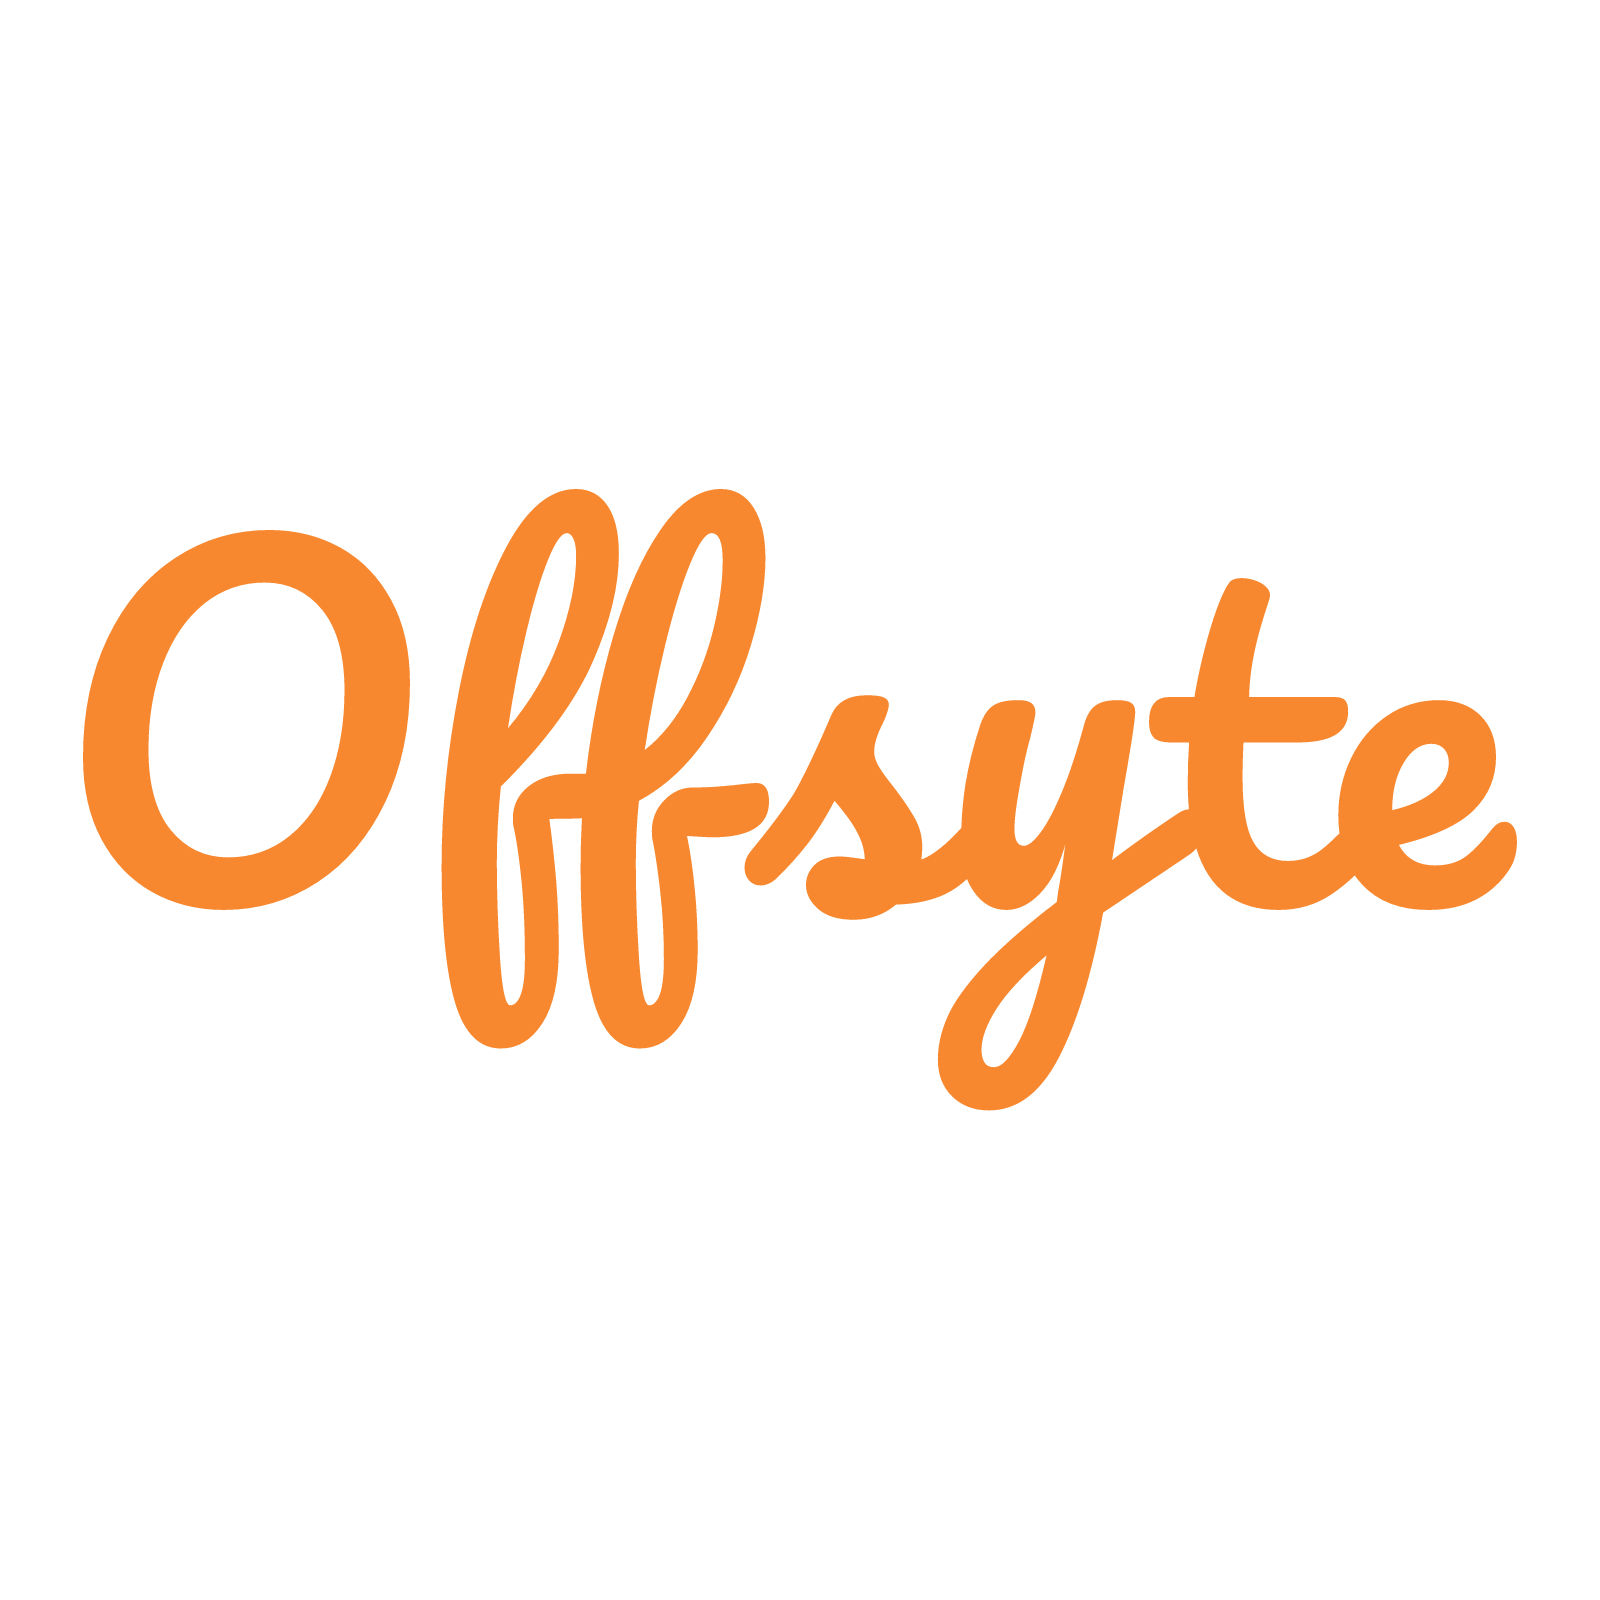 Offsyte - Logo